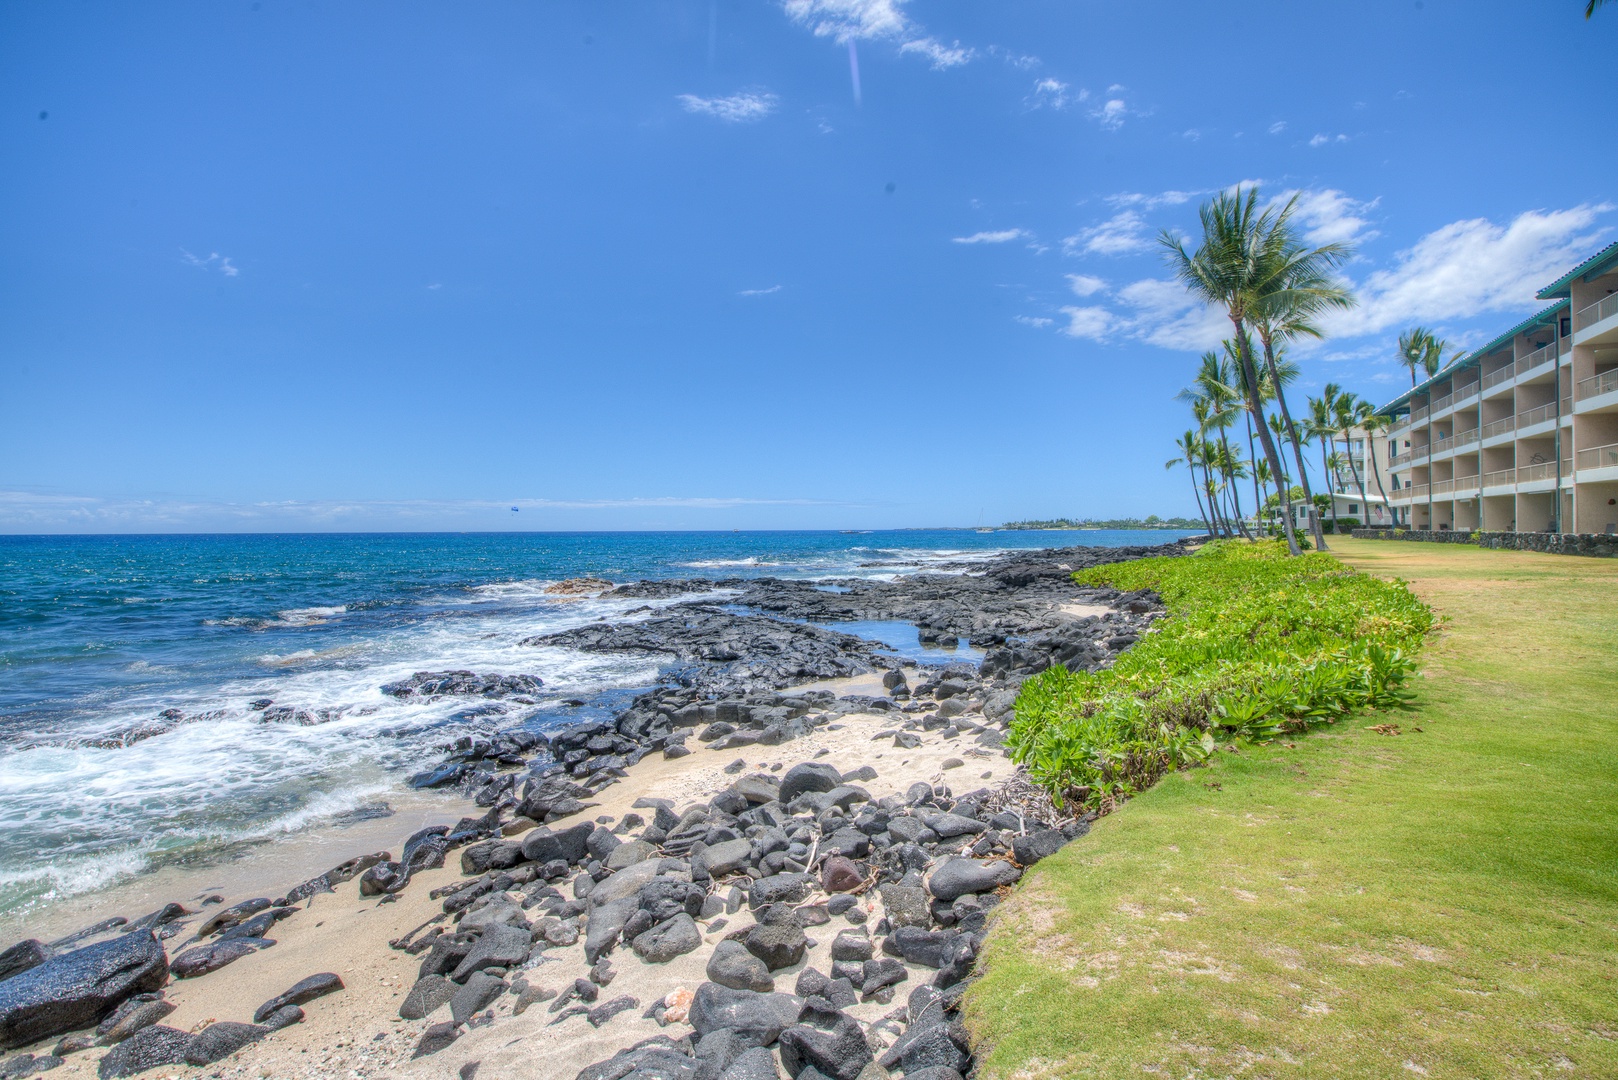 Kailua Kona Vacation Rentals, Kona Reef F11 - Year-round Sunsets, Sandy Beaches, Warm Weather, and Surf Break.